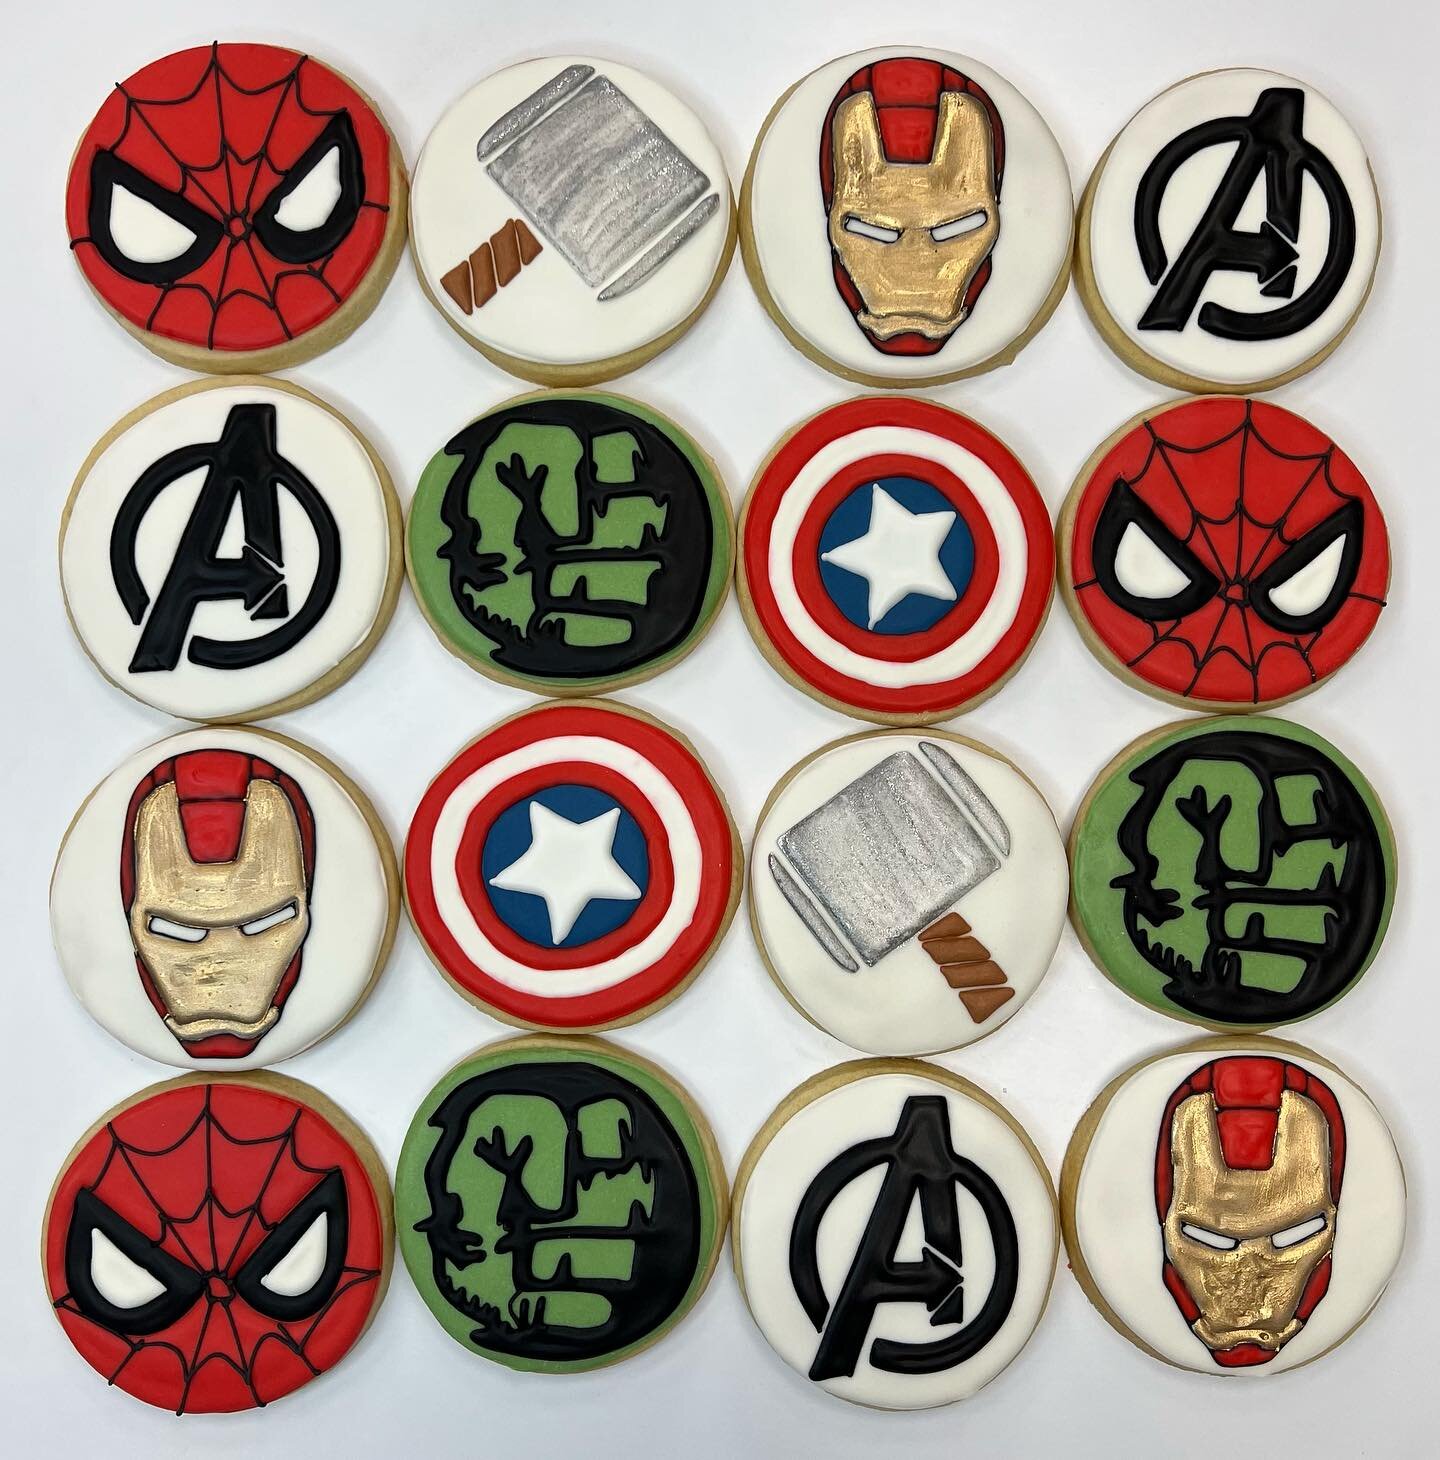 What's your favorite Marvel movie?! 

#buffalo #buffalony #cookies #marvel #marvelcomics #buffalobakery #spiderman #captinamerica #iornman #thor #avengers #hulk